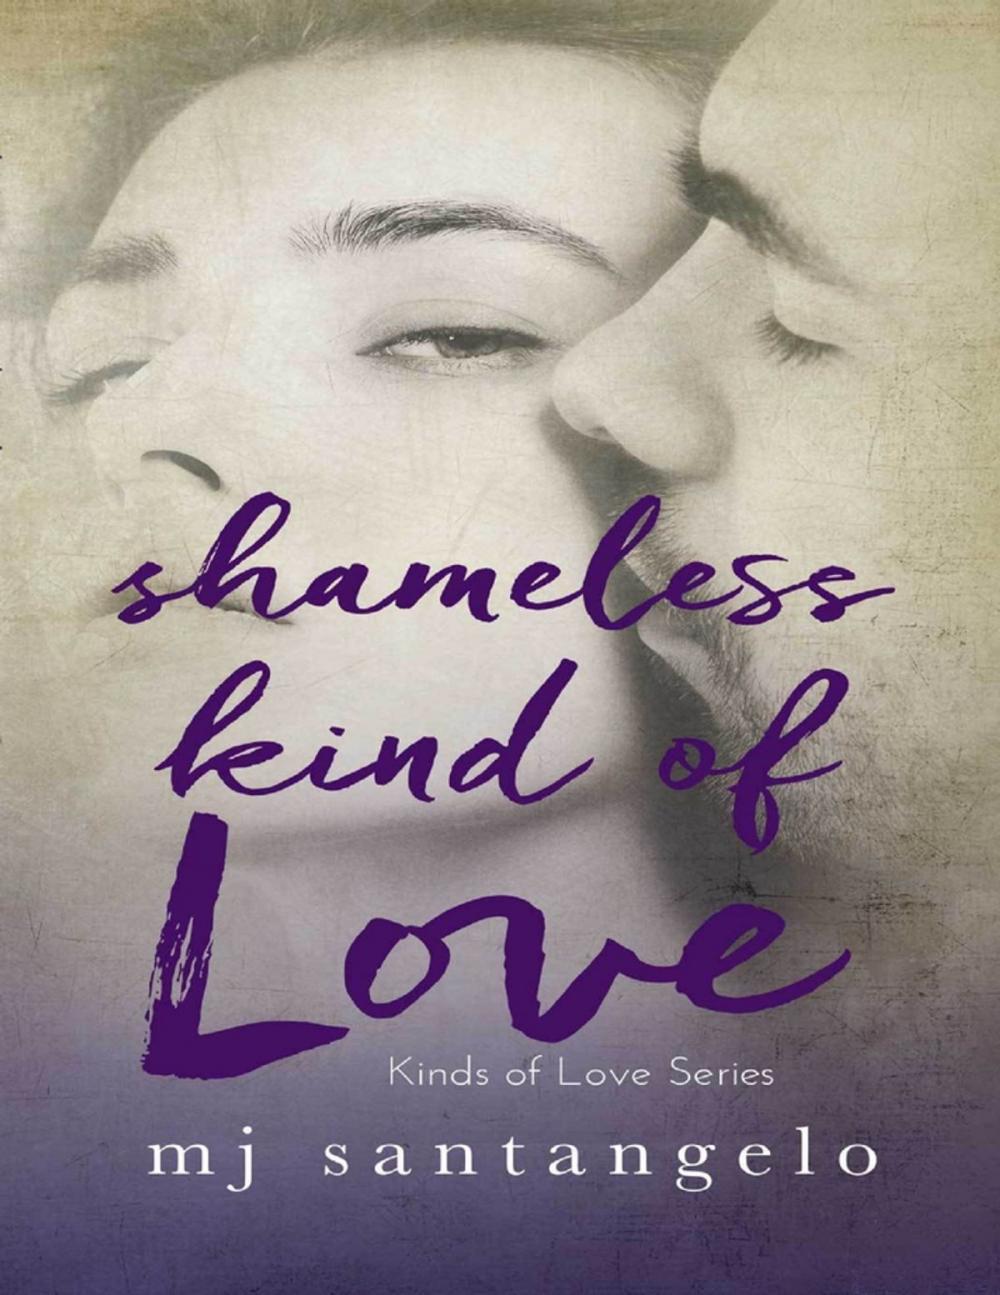 Big bigCover of Shameless Kind of Love: Kinds of Love Series